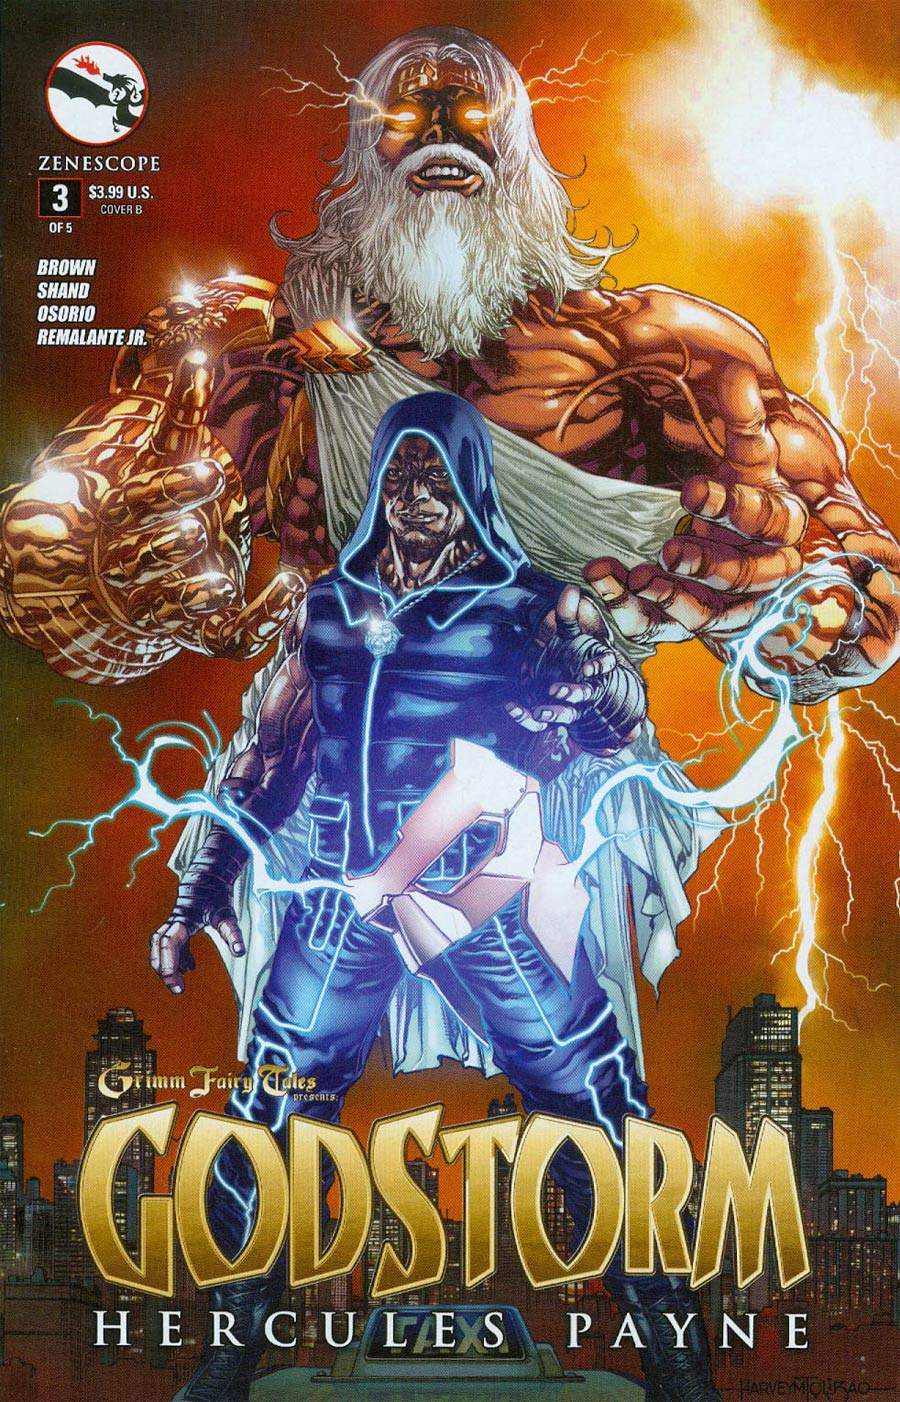 Grimm Fairy Tales Presents Godstorm Hercules Payne #3 Cover B Harvey Tolibao